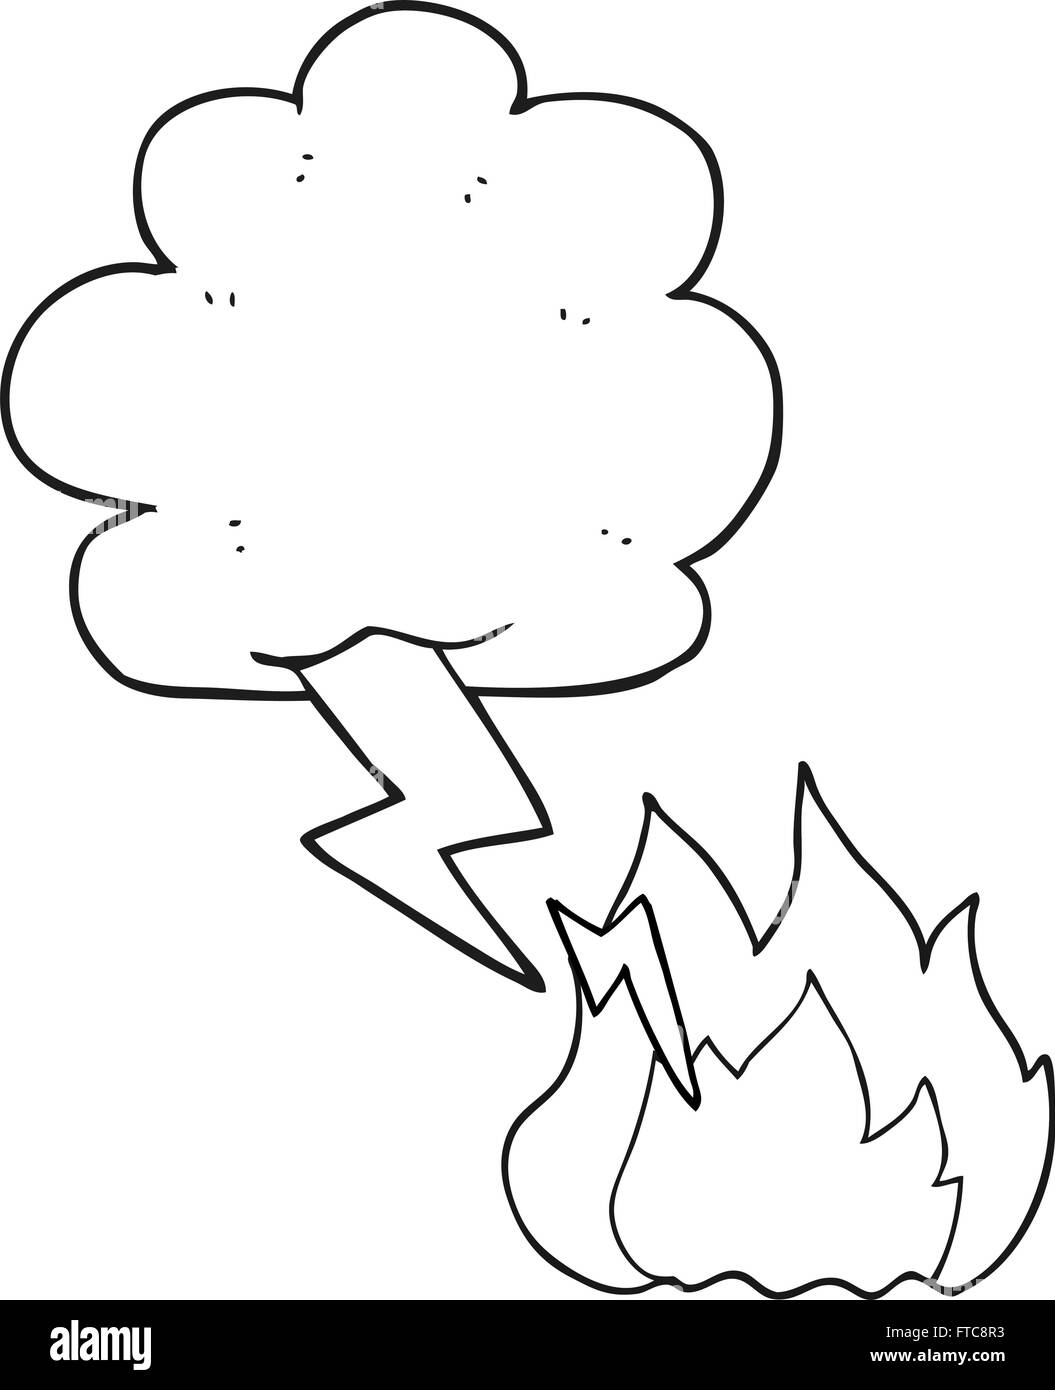 freehand drawn black and white cartoon thundercloud lightning strike Stock Vector